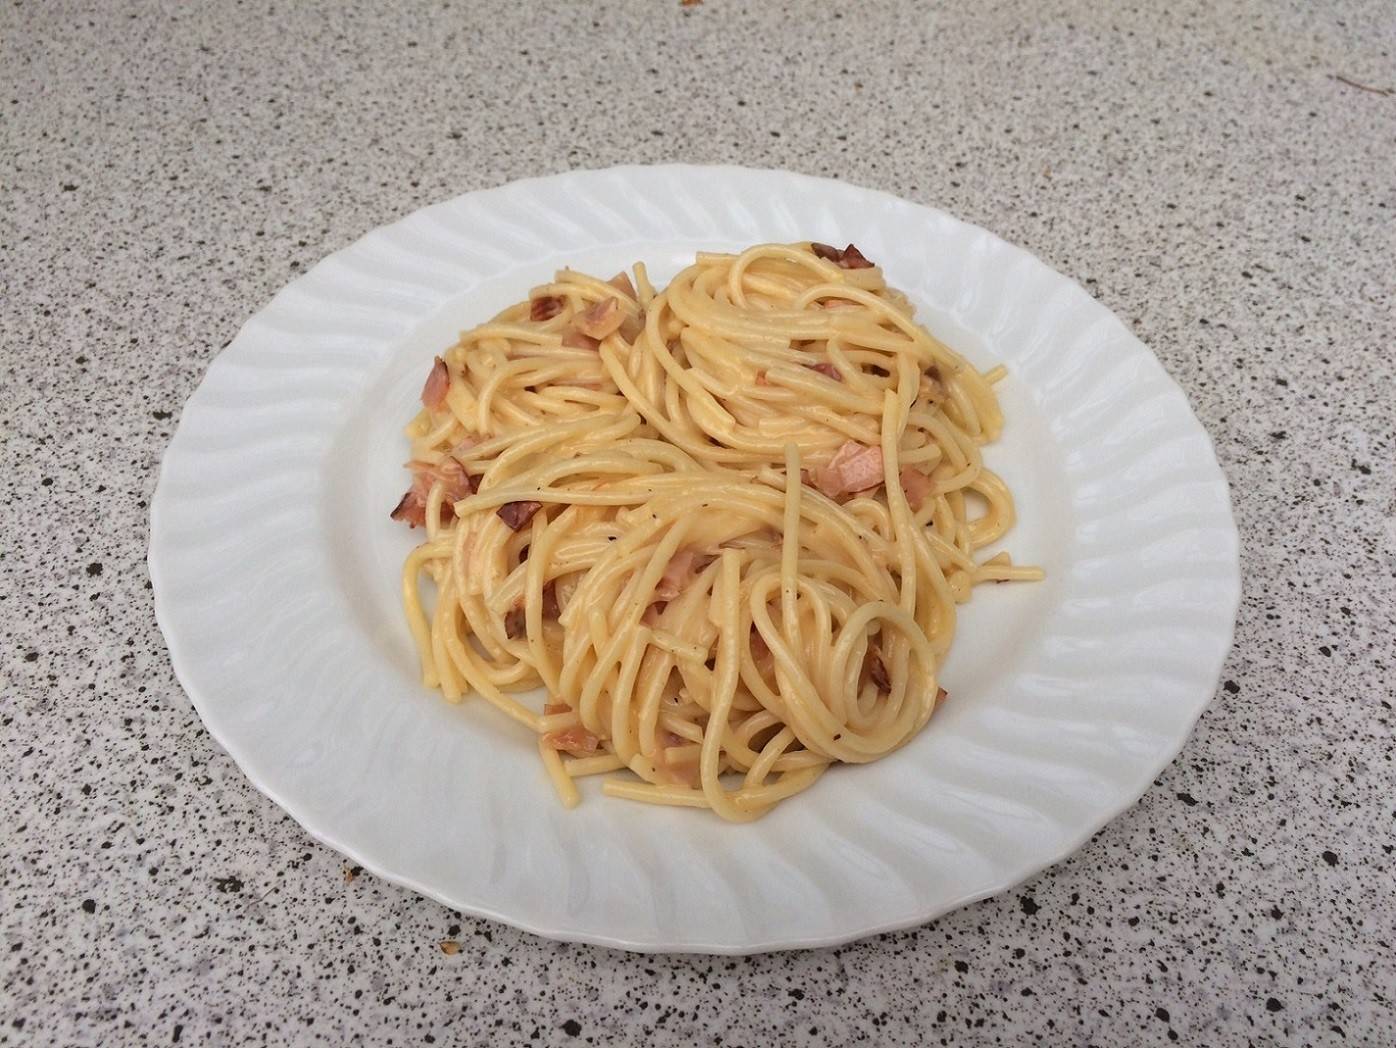 Spaghetti Carbonara mit Räucherspeck